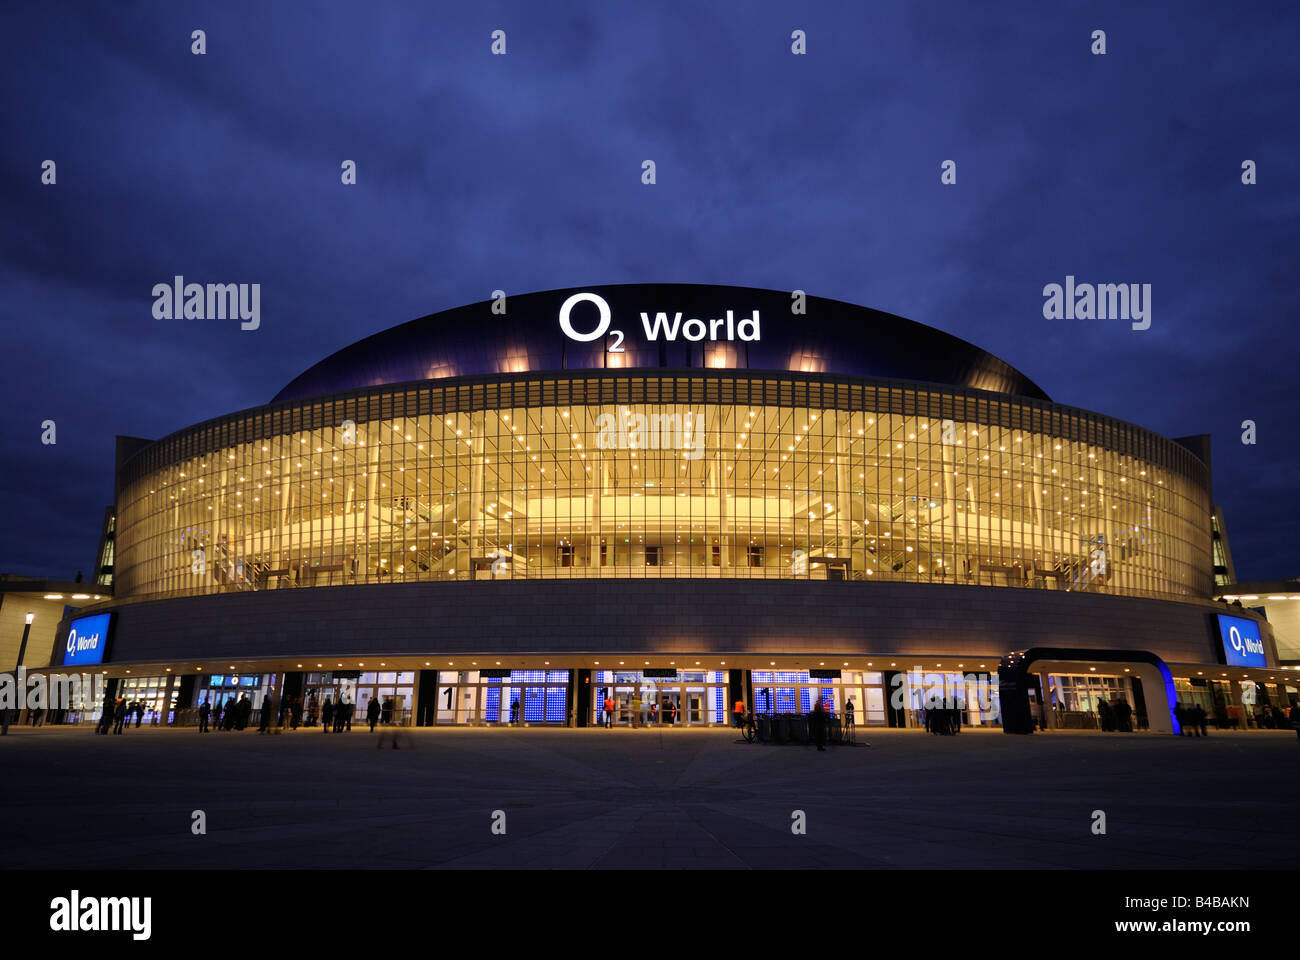 O2 World Arena O2 della Anschutz Entertainment Group, Berlin Friedrichshain, Germania, Europa. Foto Stock